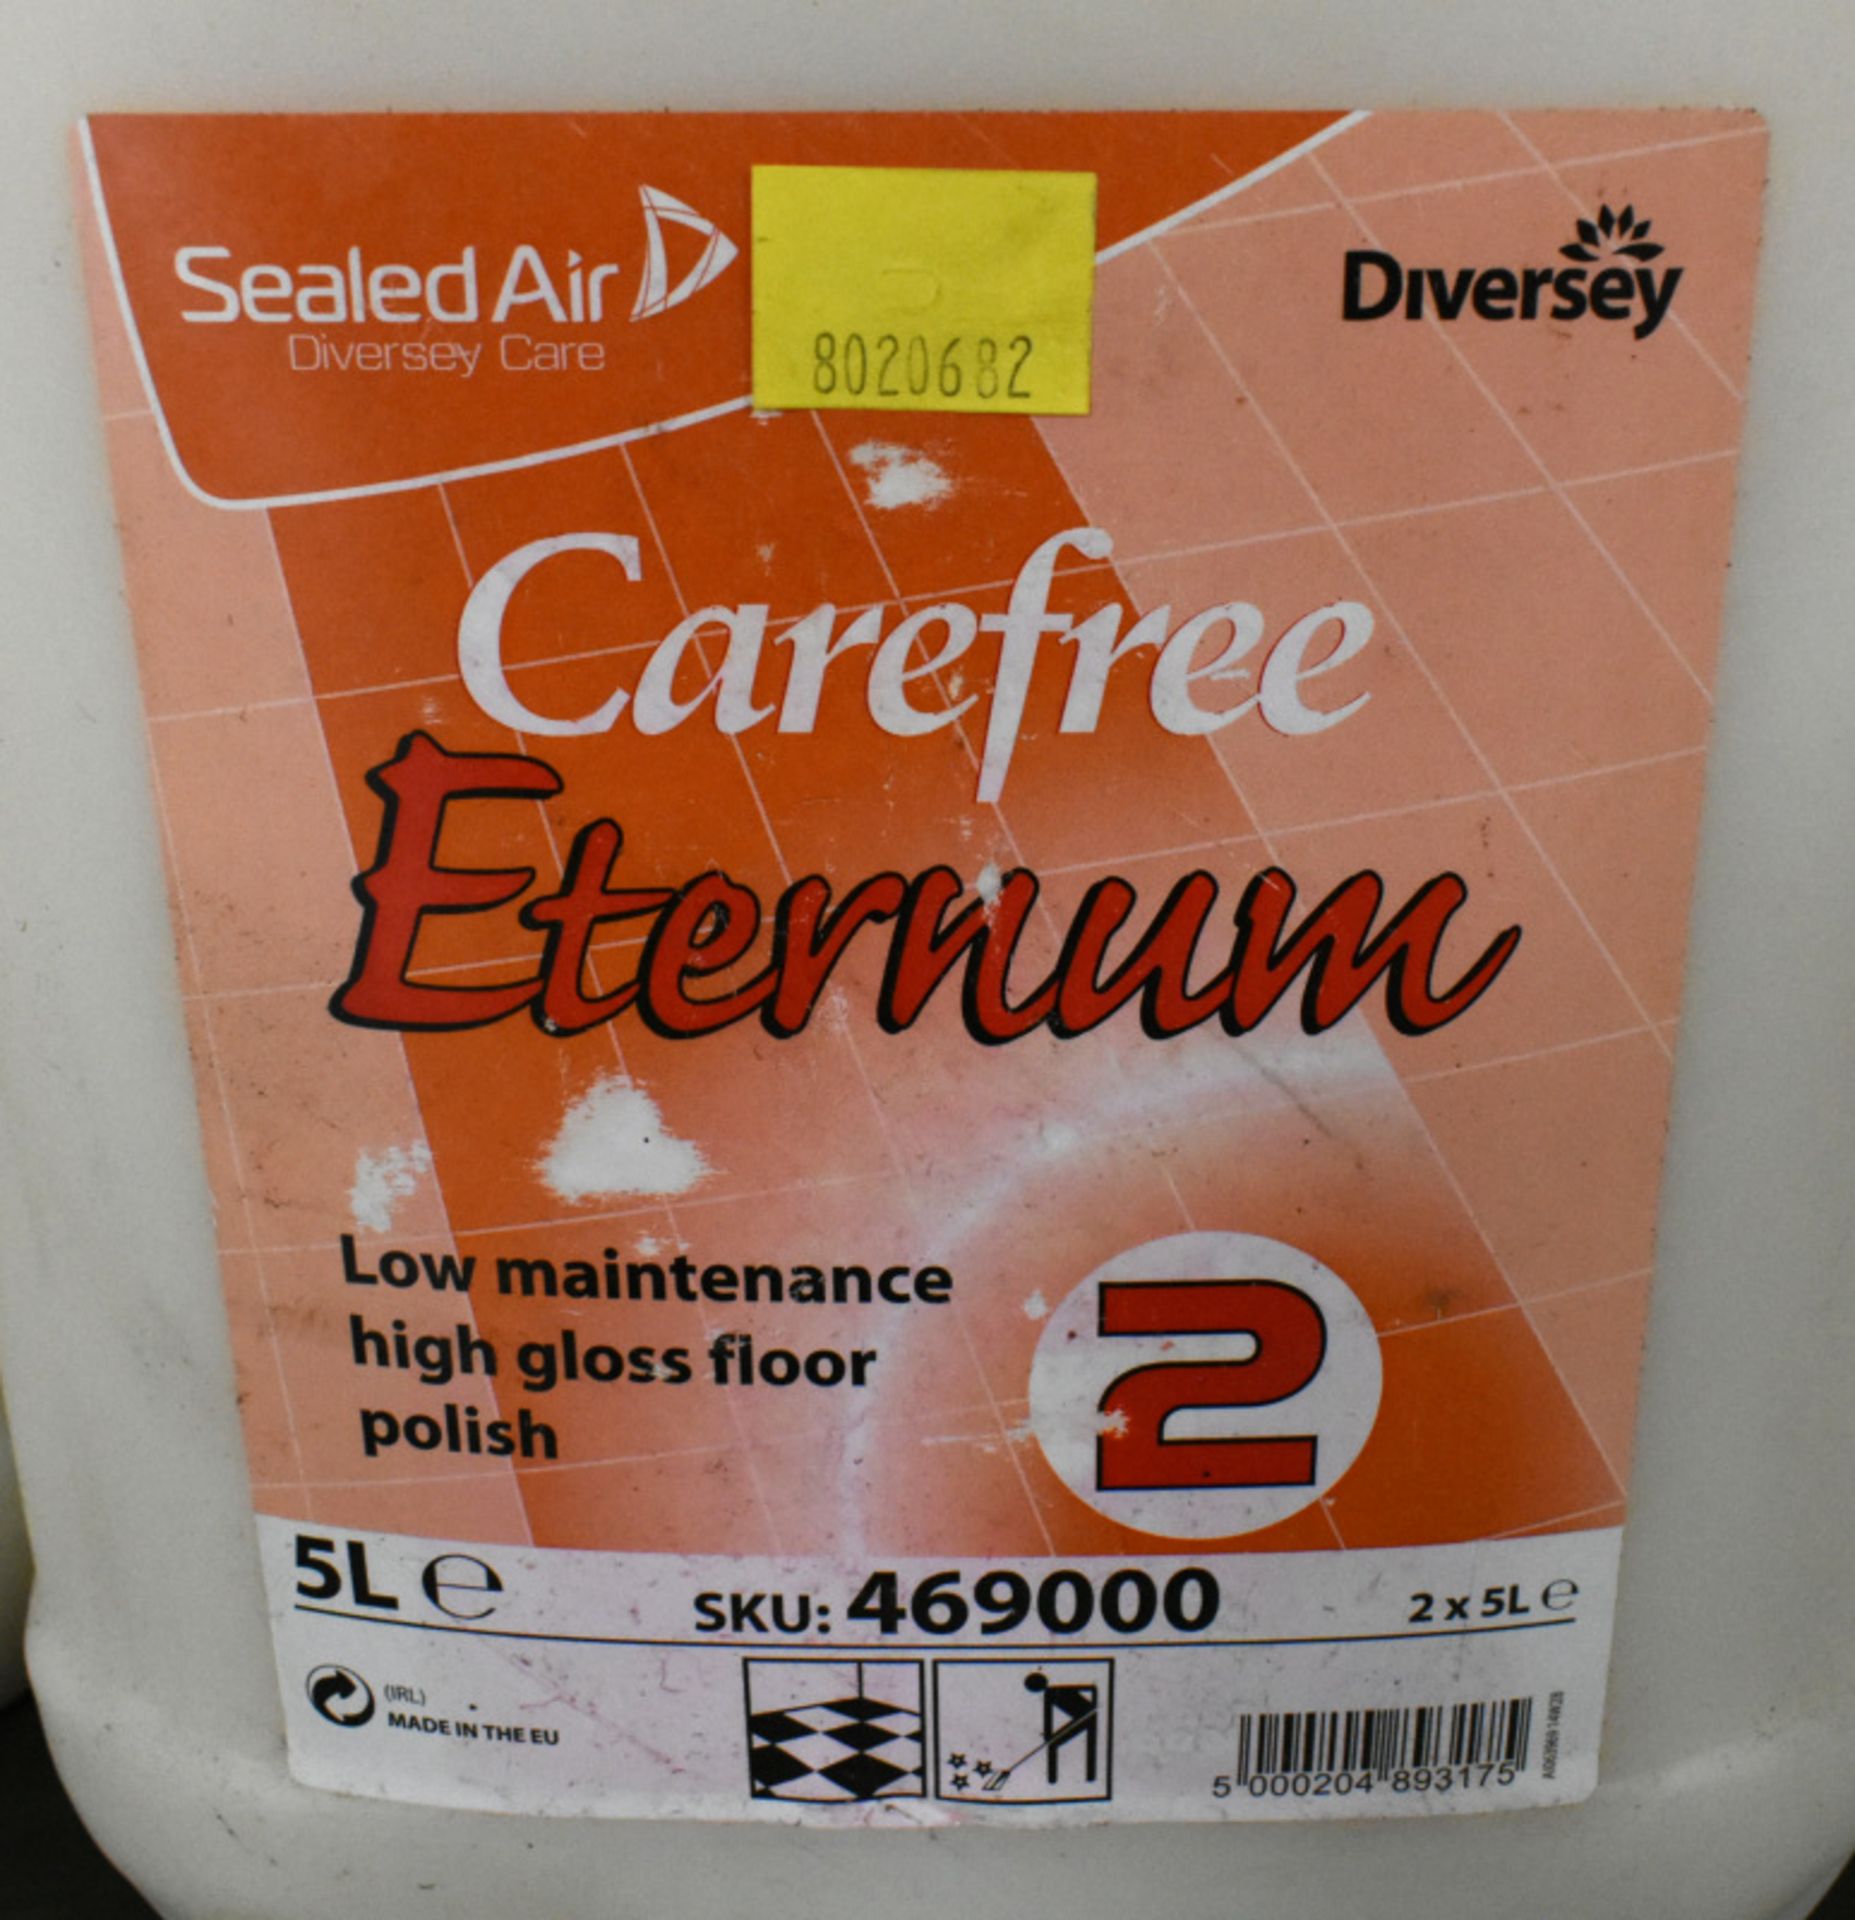 30 x Diversey 5L Carefree Eternum Low maintenance high gloss floor polish - Image 2 of 2